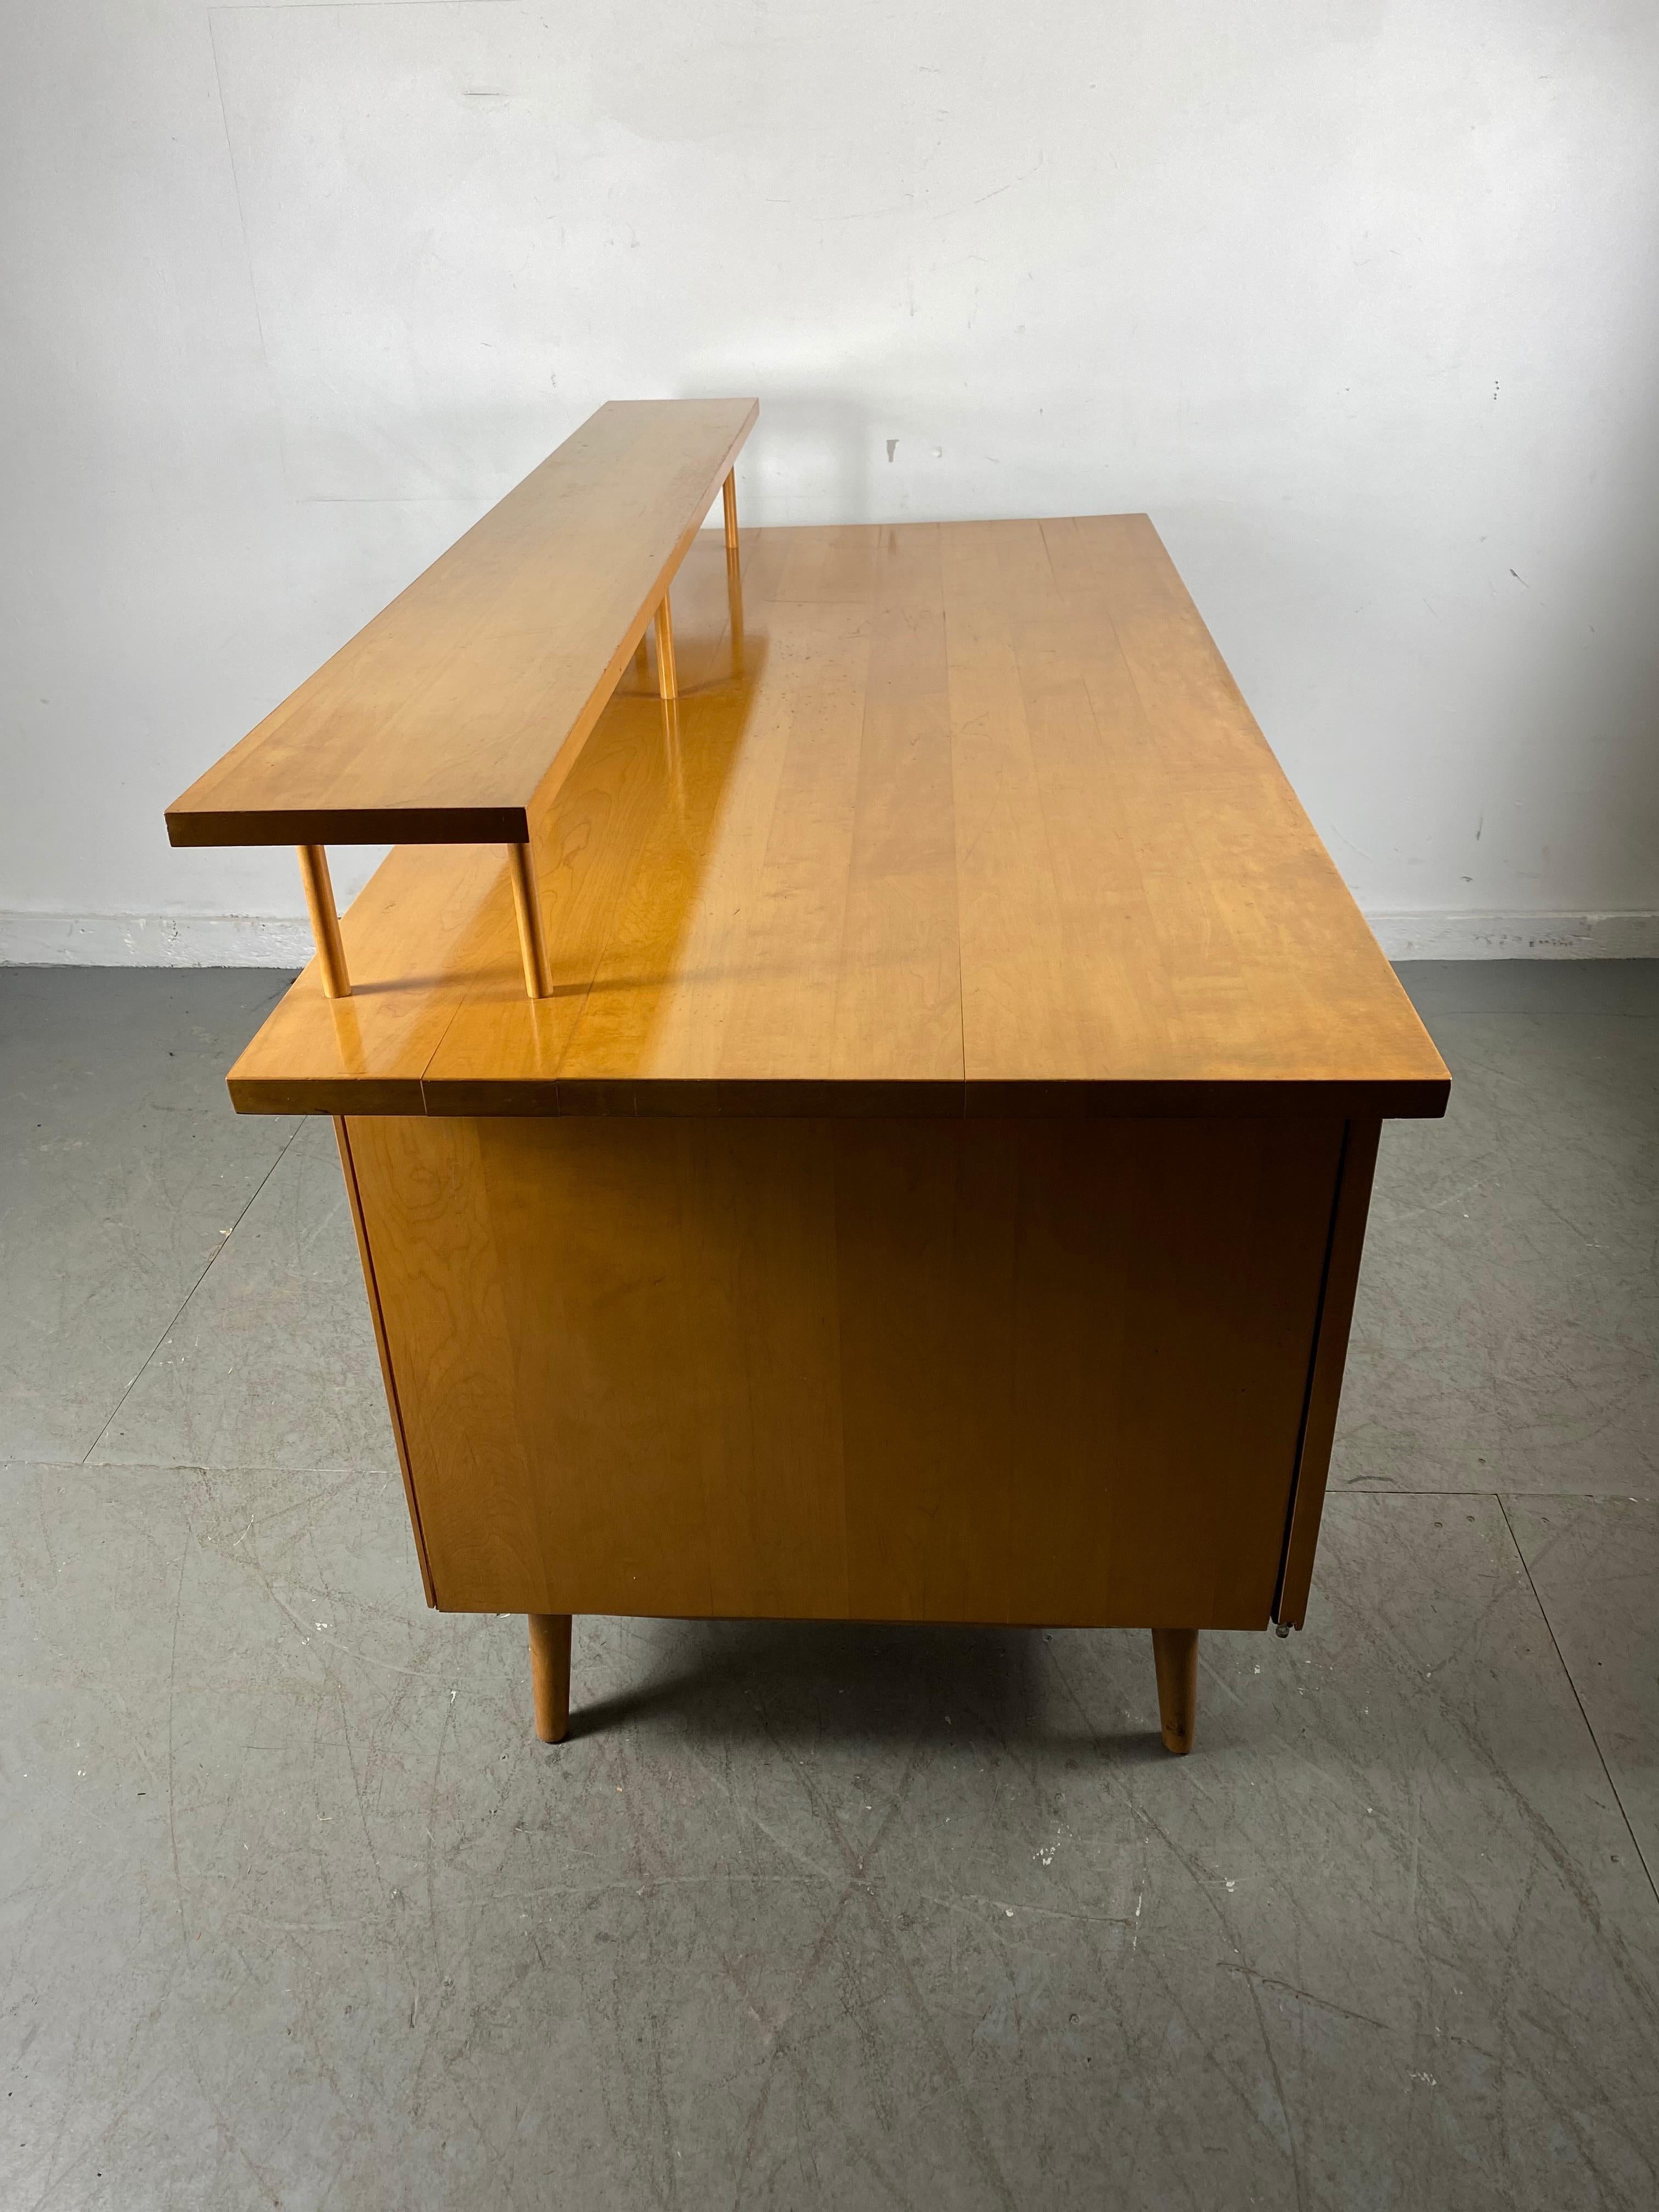 Mid-20th Century Rare Paul McCobb Desk in Maple, 1950s, Multi-Level, Classic Modernist Design